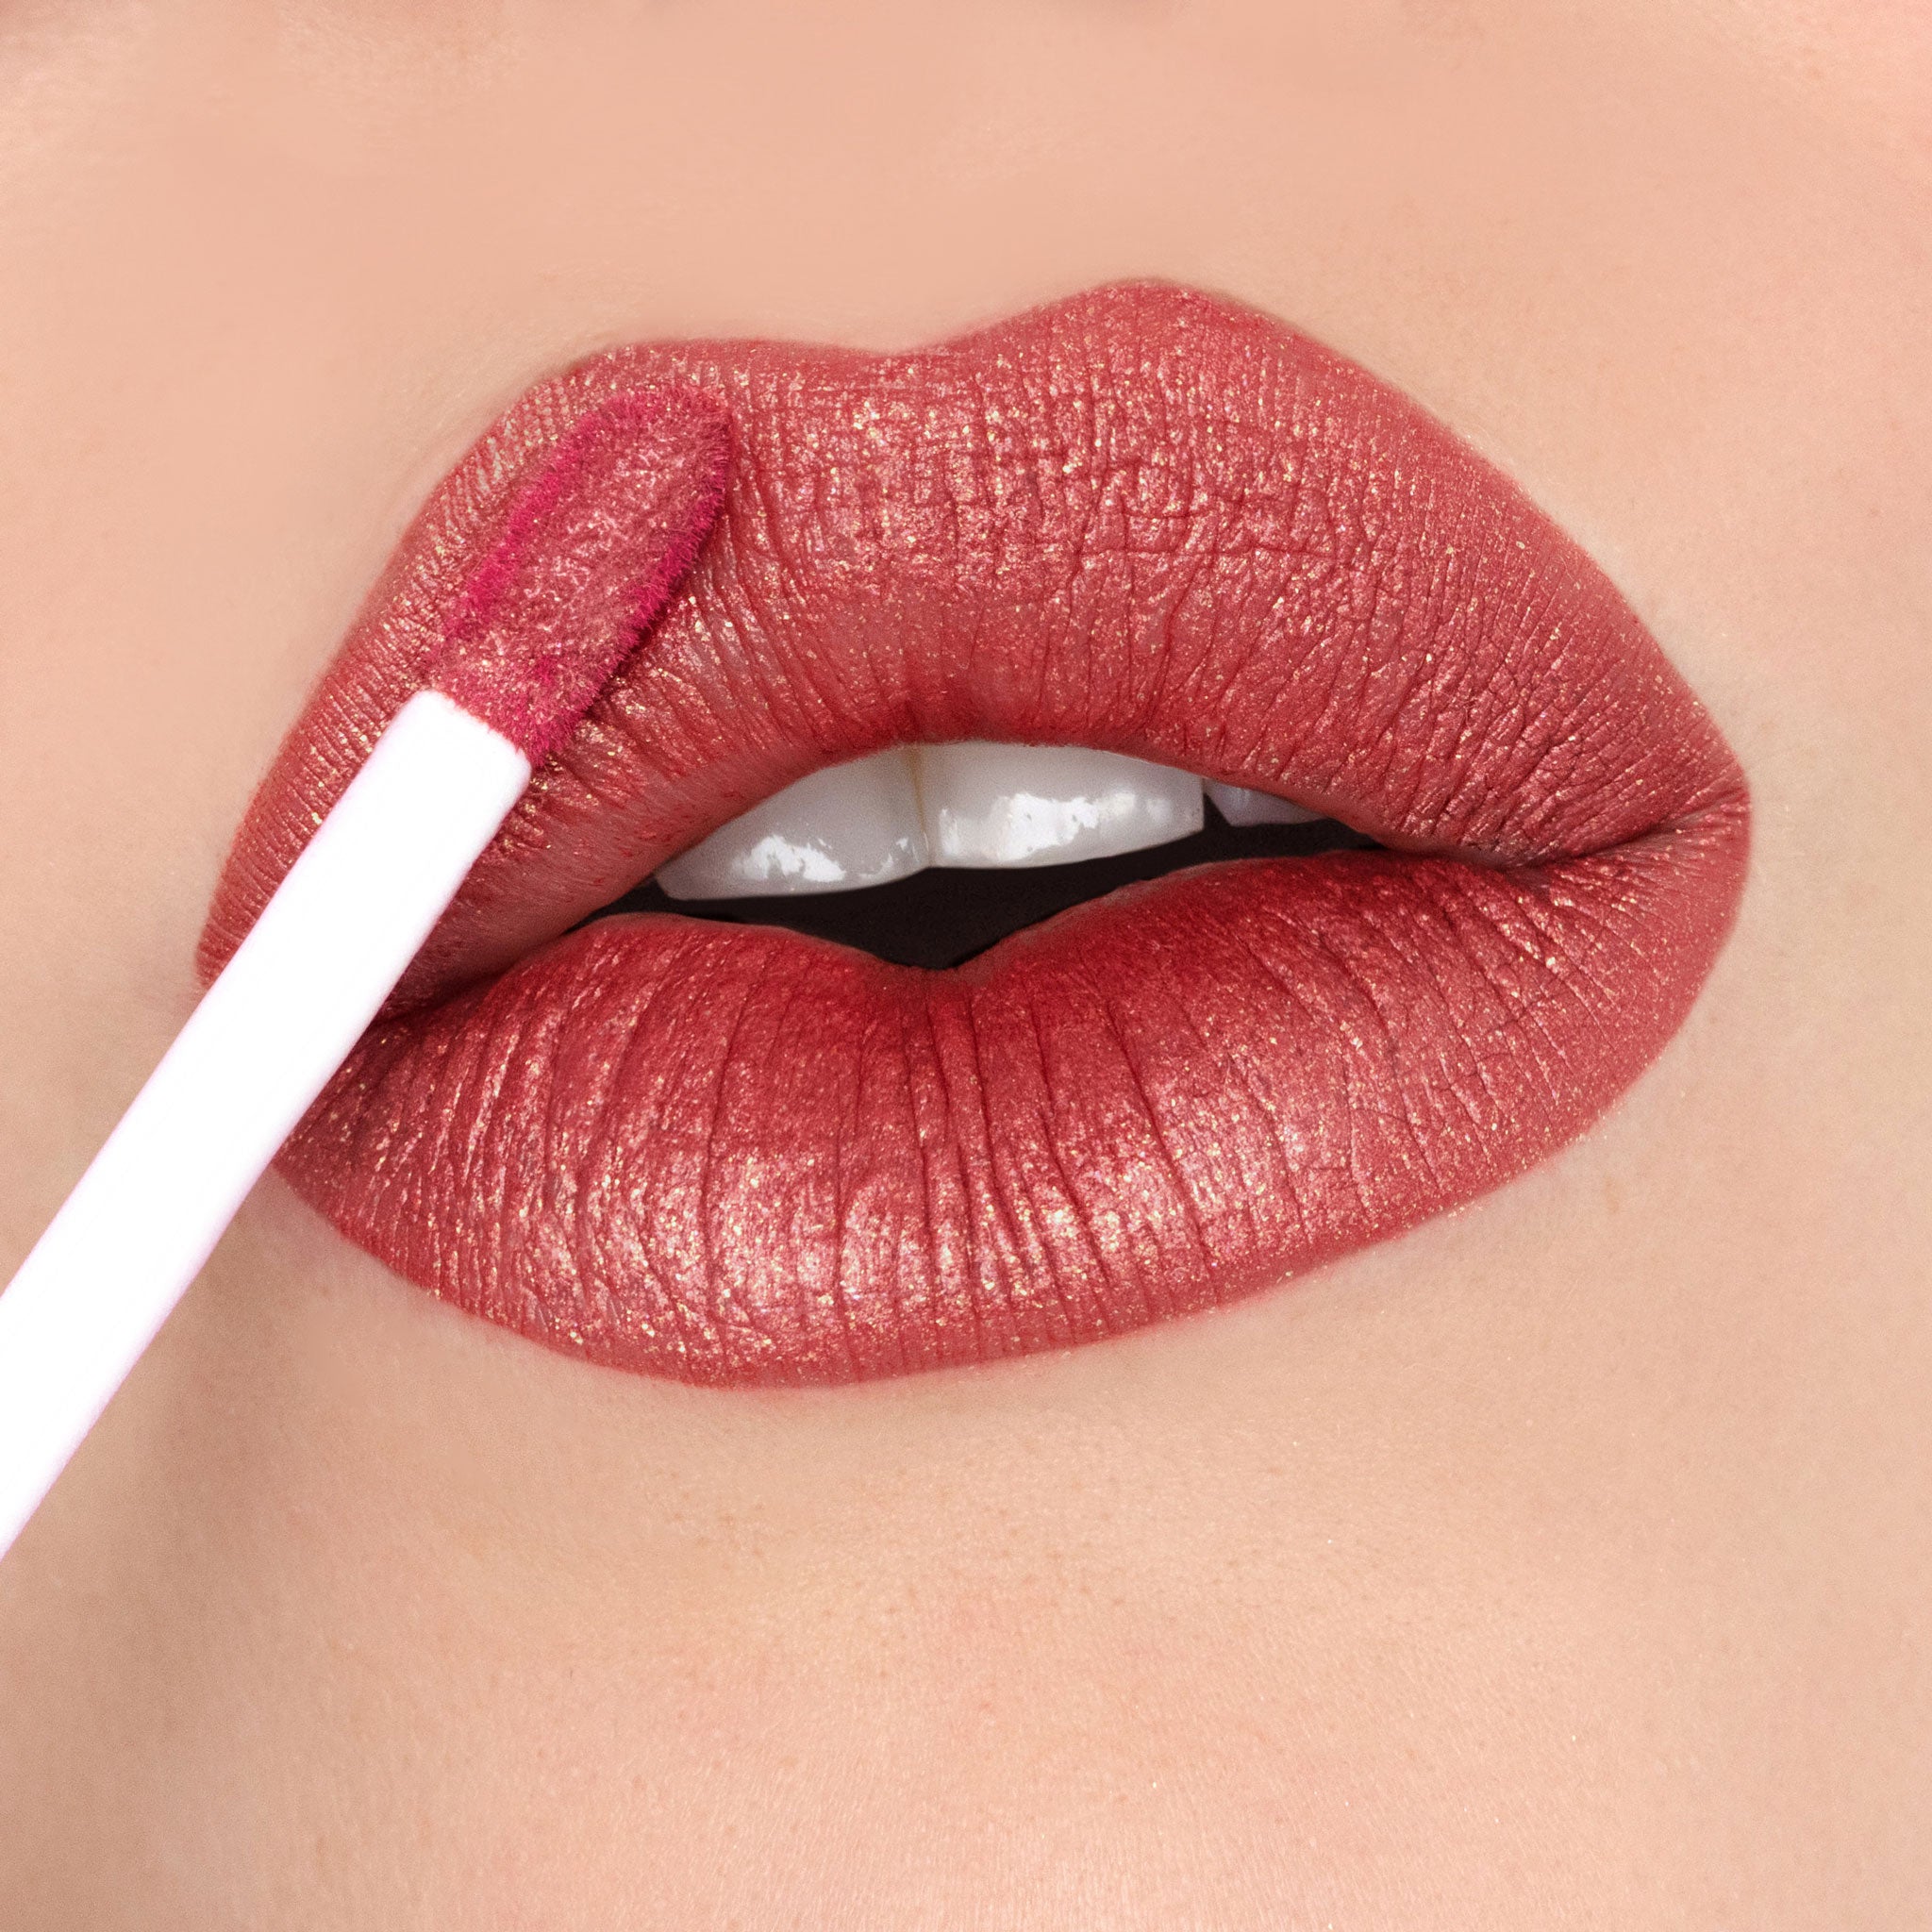 Power Red Matte Liquid Lipstick Red Lipstick Maroon Vegan Cruelty-free Dark  Red Makeup Cosmetics Gluten Free Beauty 